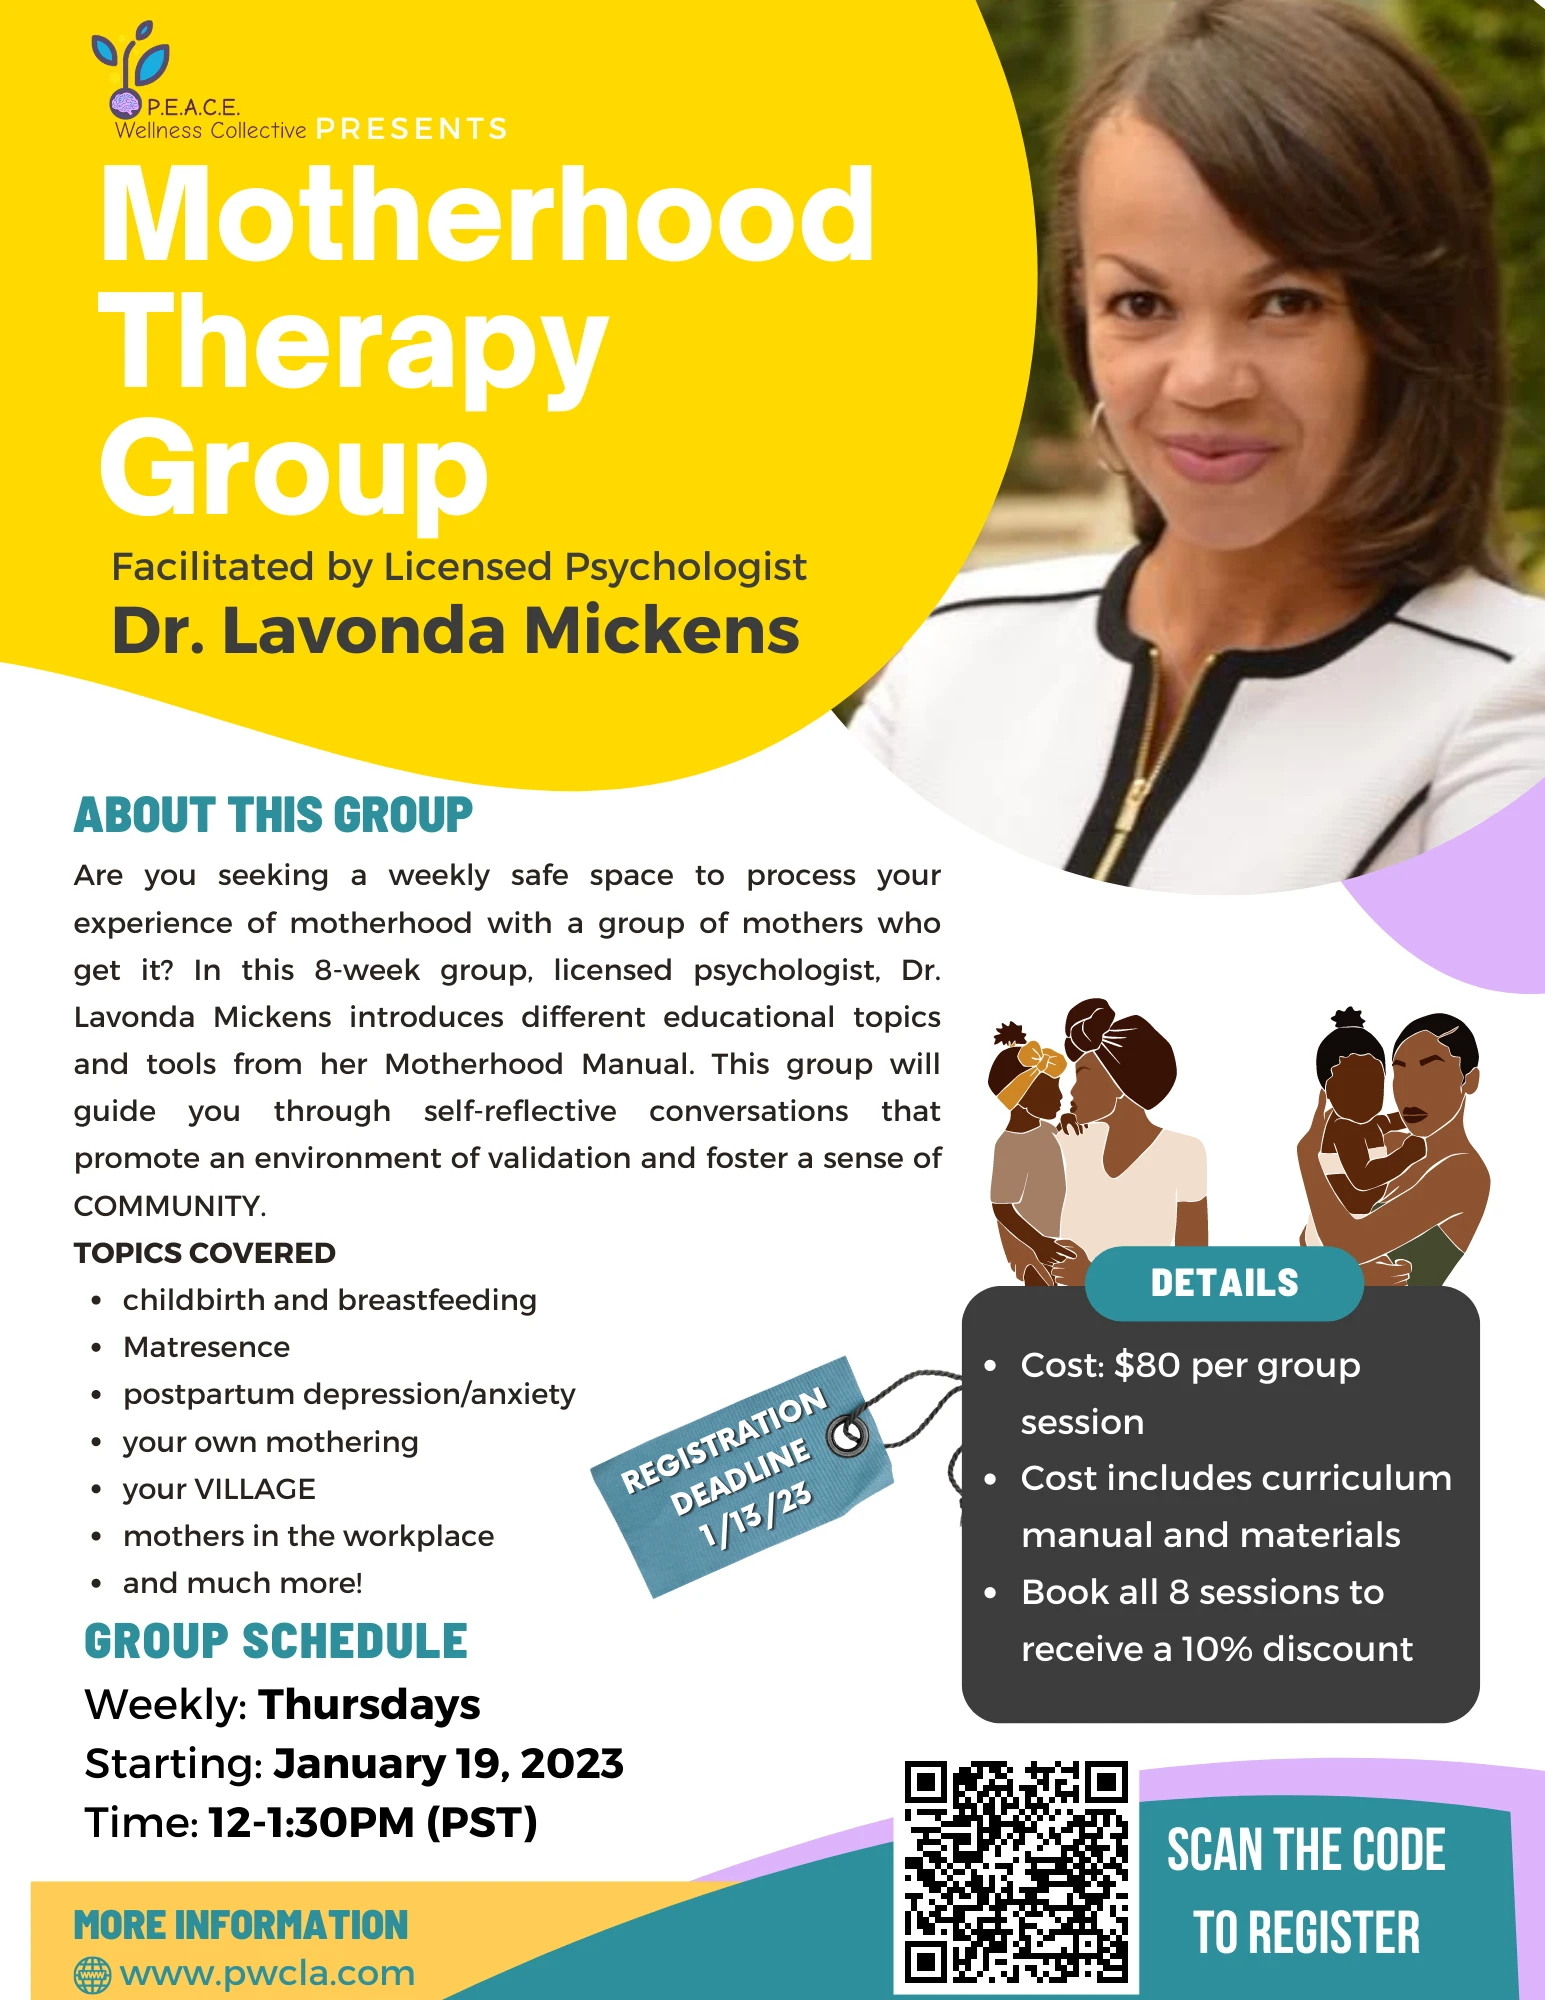 Motherhood therapy group flyer